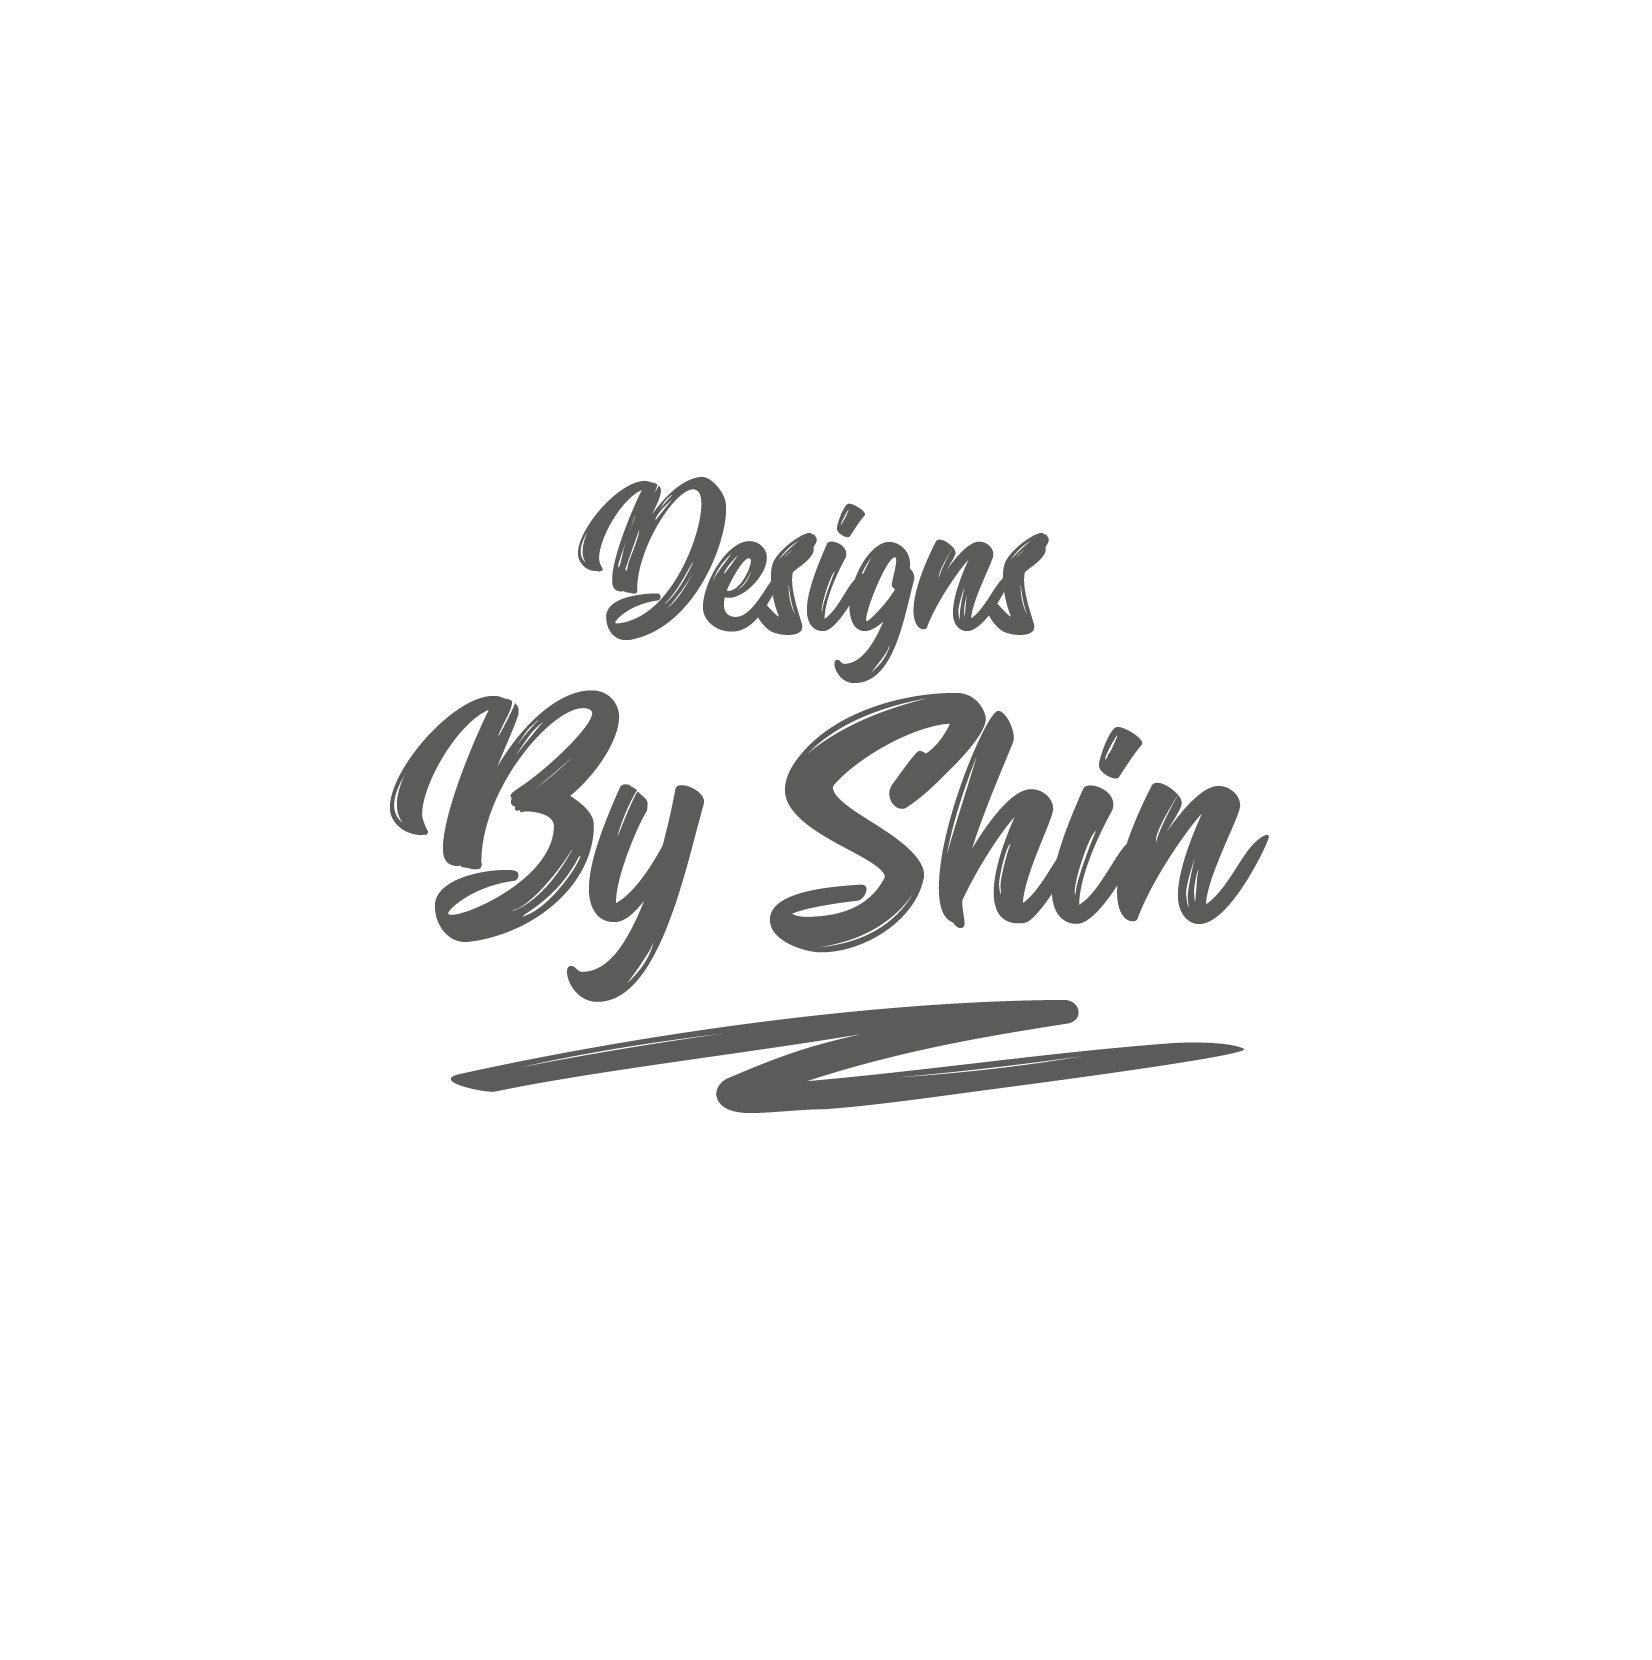 Designsbyshin – Designs by Shin